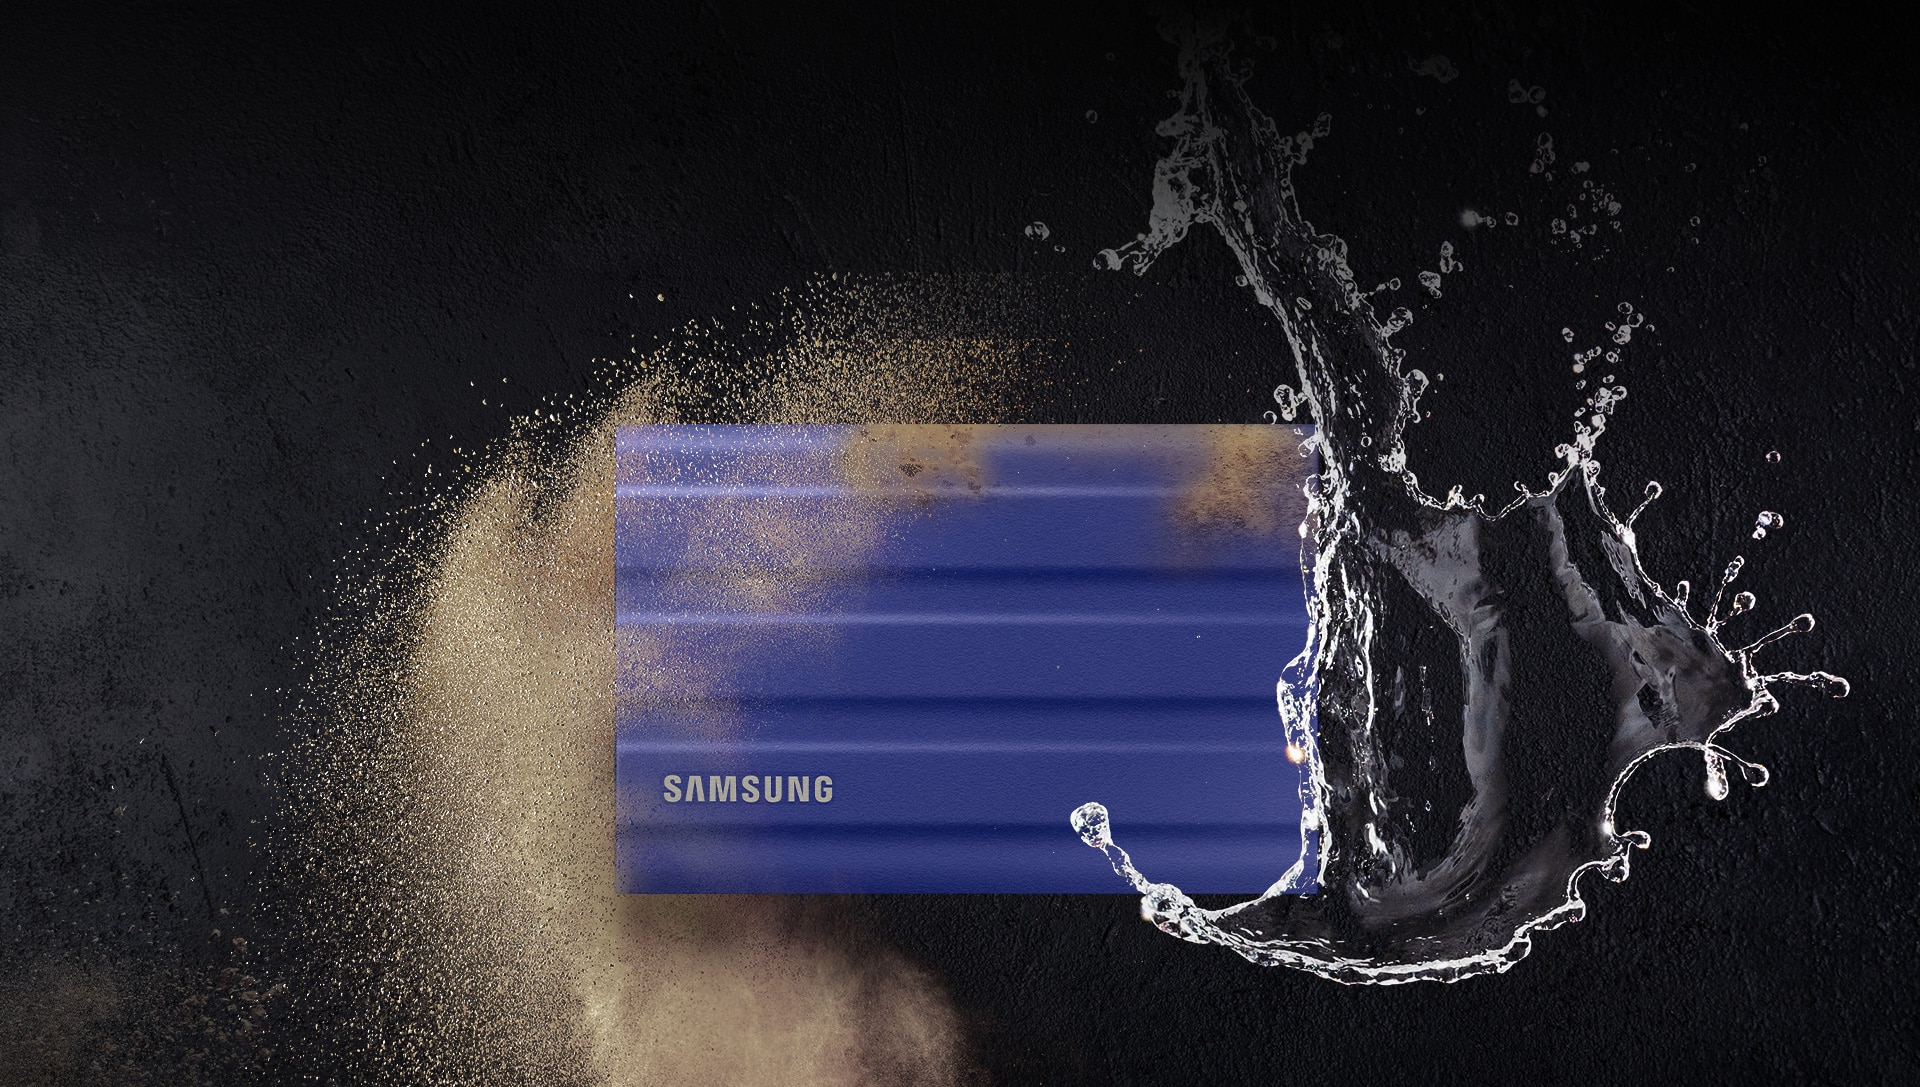 Samsung - Disque dur externe T7 Shield 1 To SSD - Beige